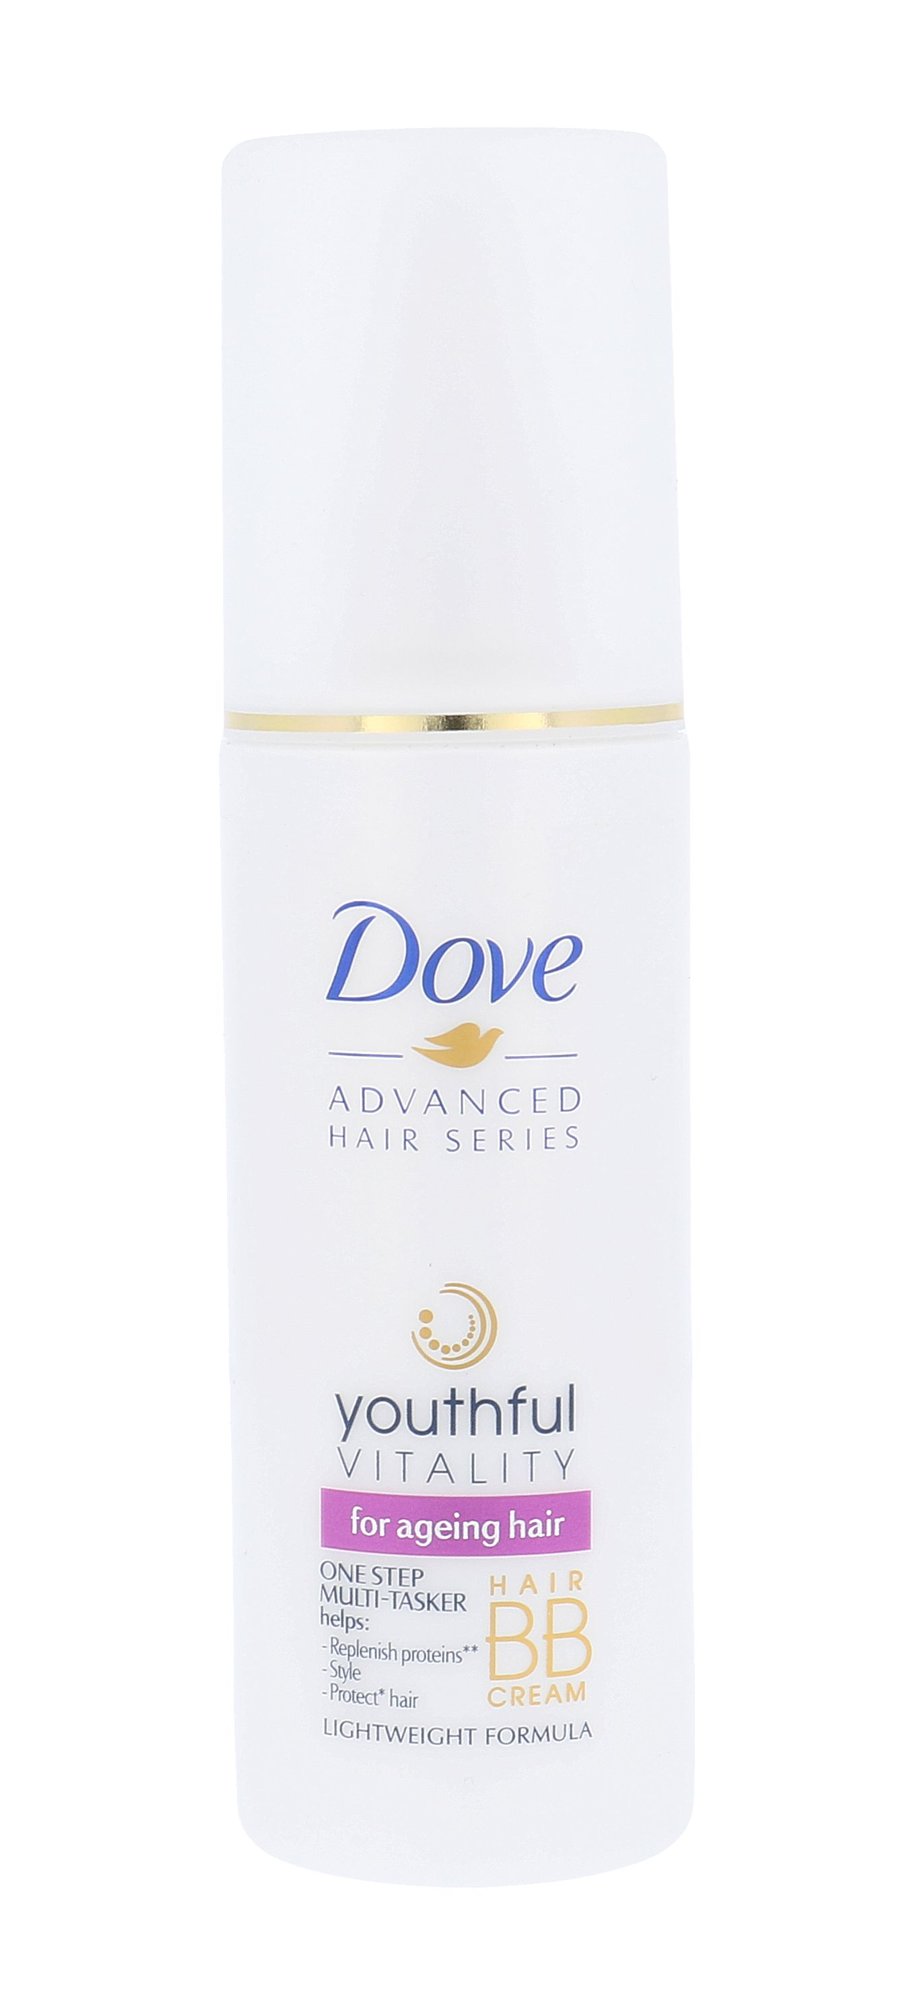 Dove Advanced Hair Series Youthful Vitality BB Cream